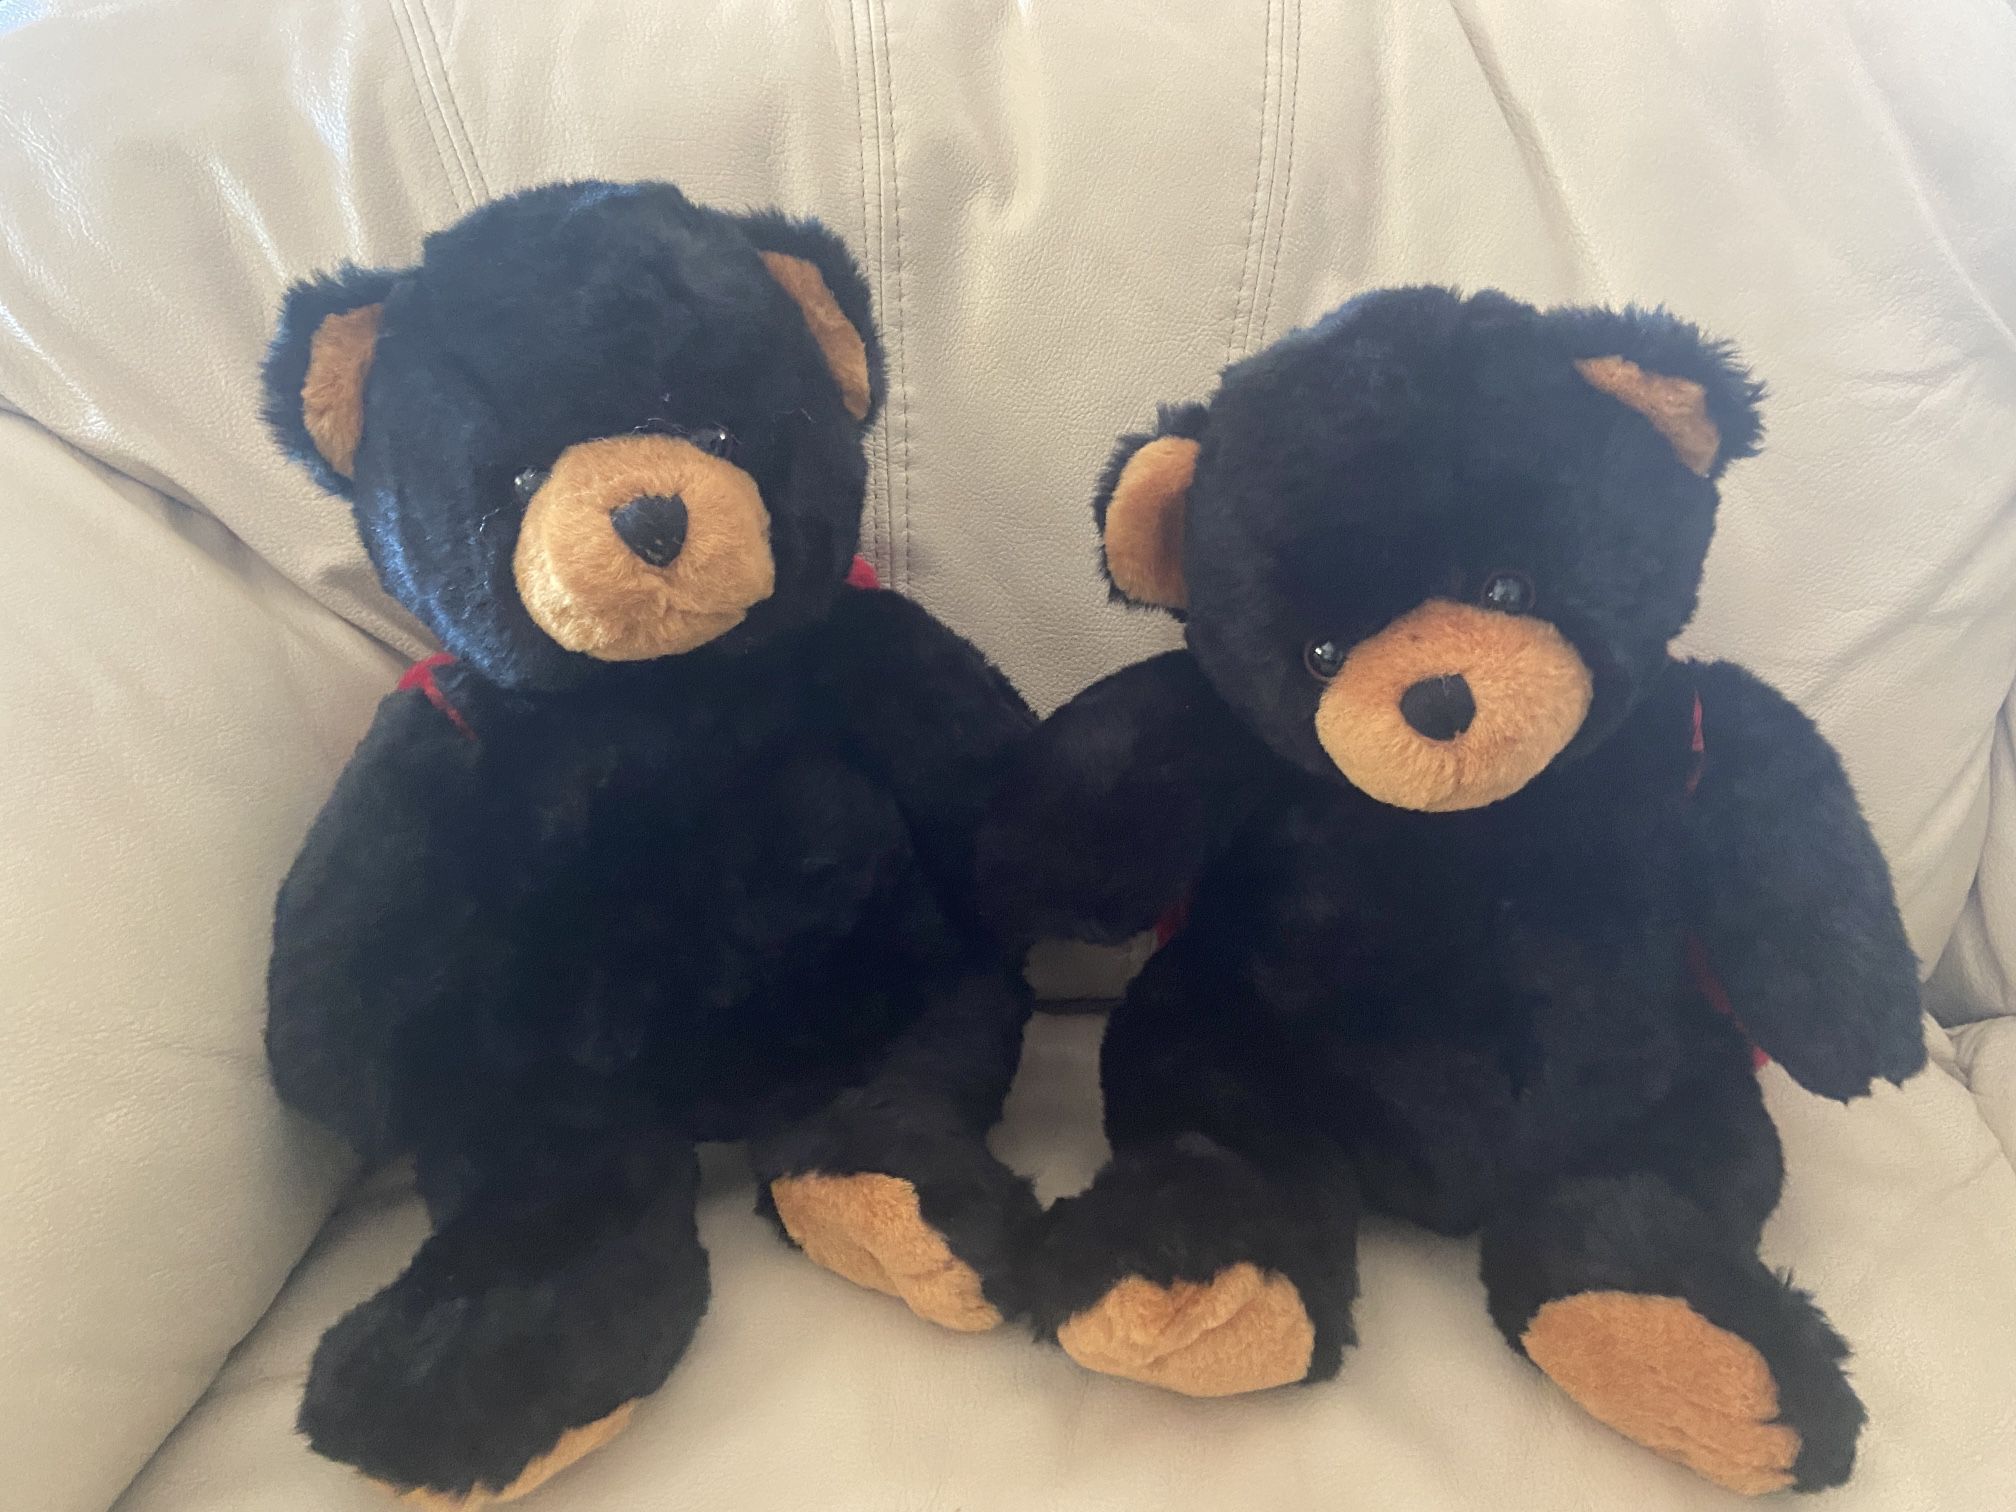 Teddy Bears With Lay Bug Wings